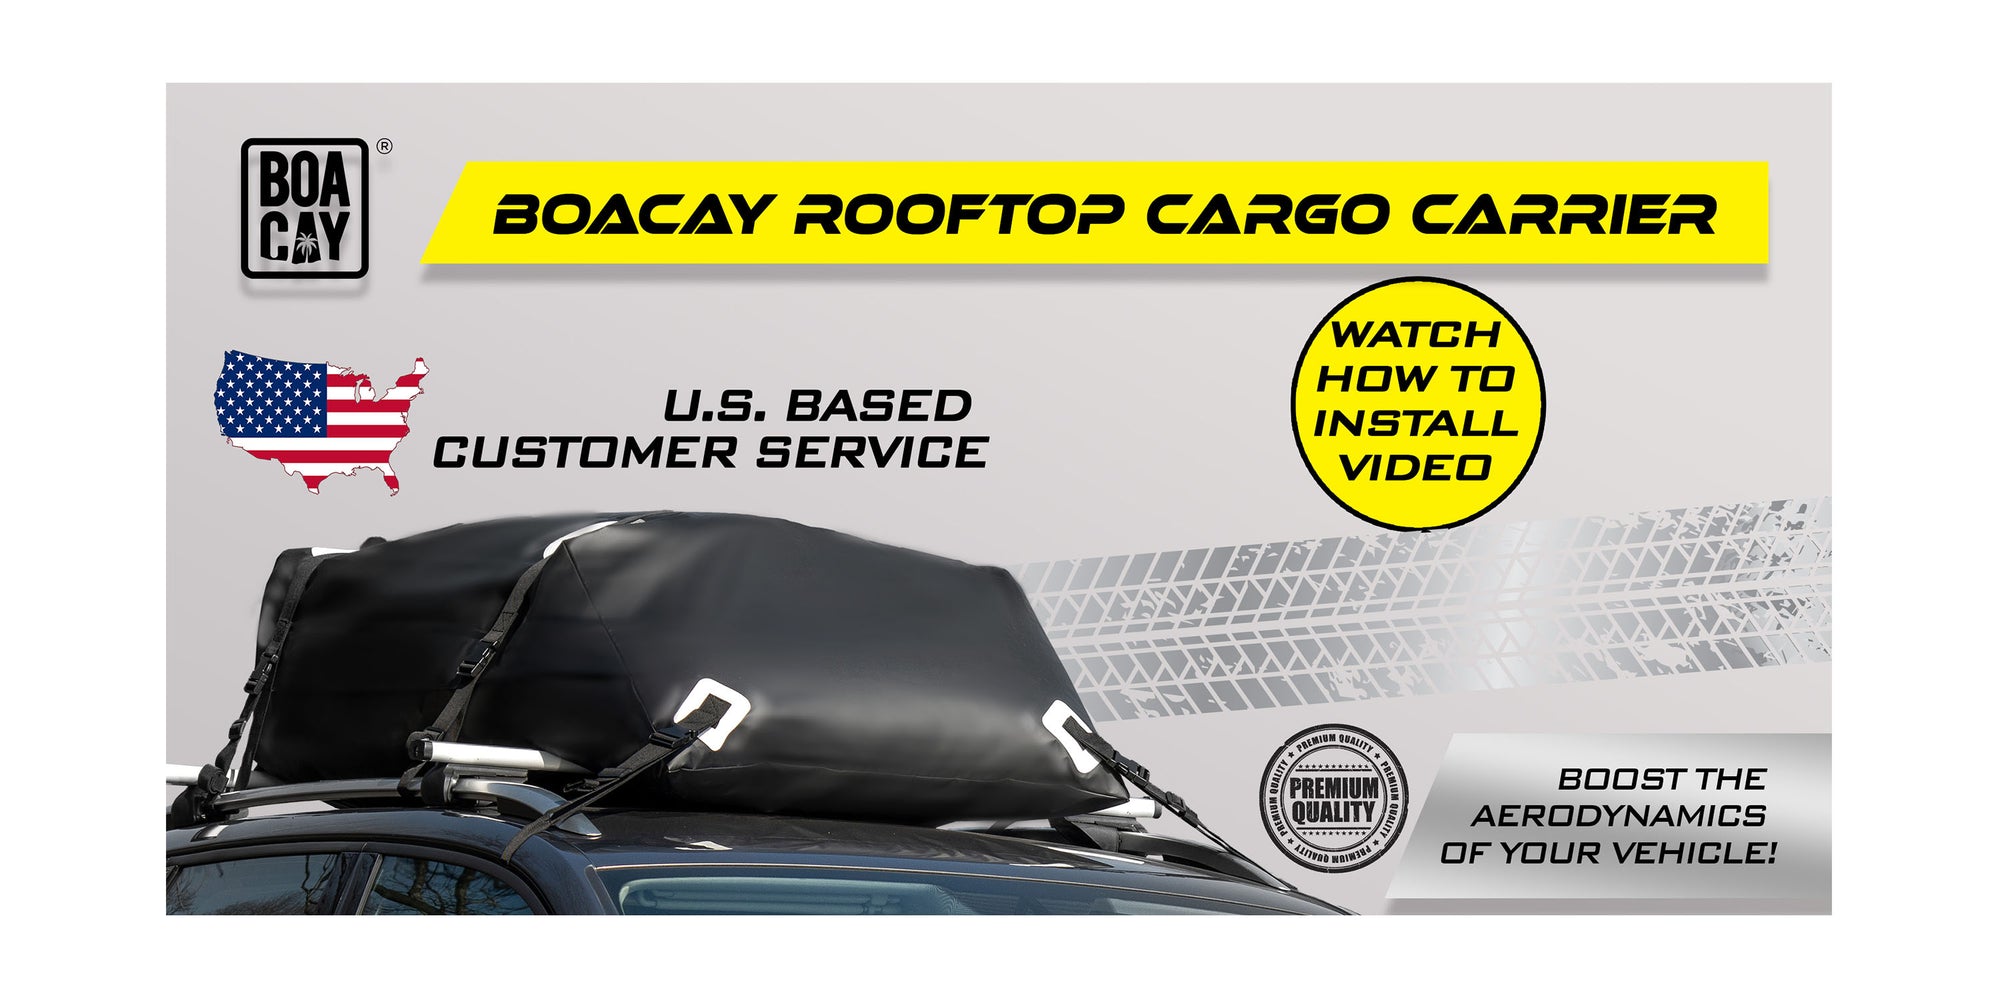 Cargo Bags, Cargo Carrier Bags, rooftop cargo carriers, cargo carriers, Cargo Carrier, Carrier Bags, Cargo Bags, rooftop cargo carrier, rooftop cargo bag